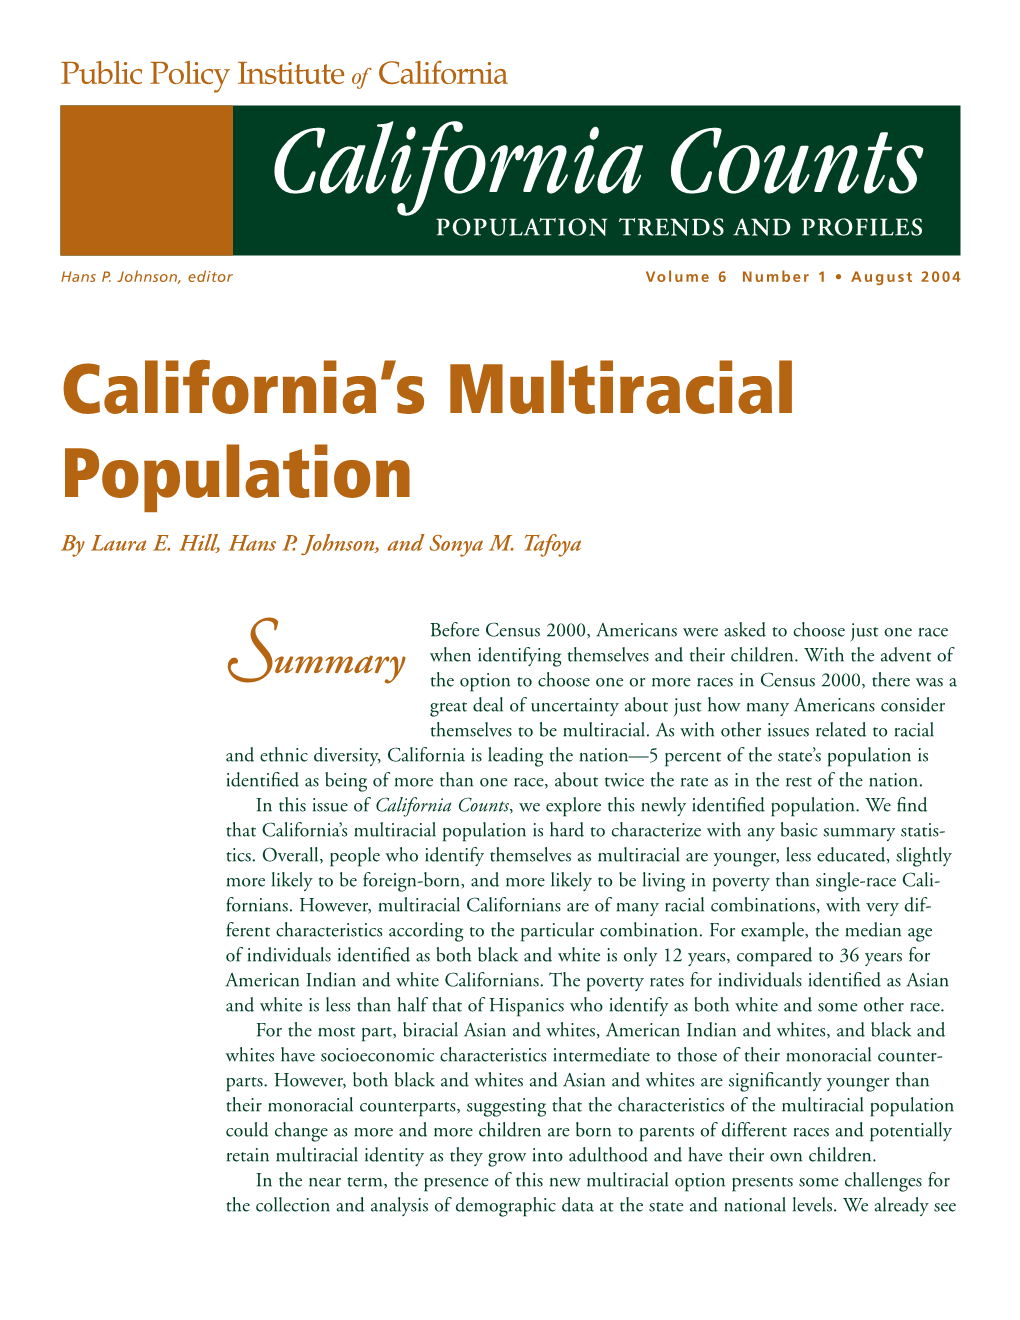 California's Multiracial Population